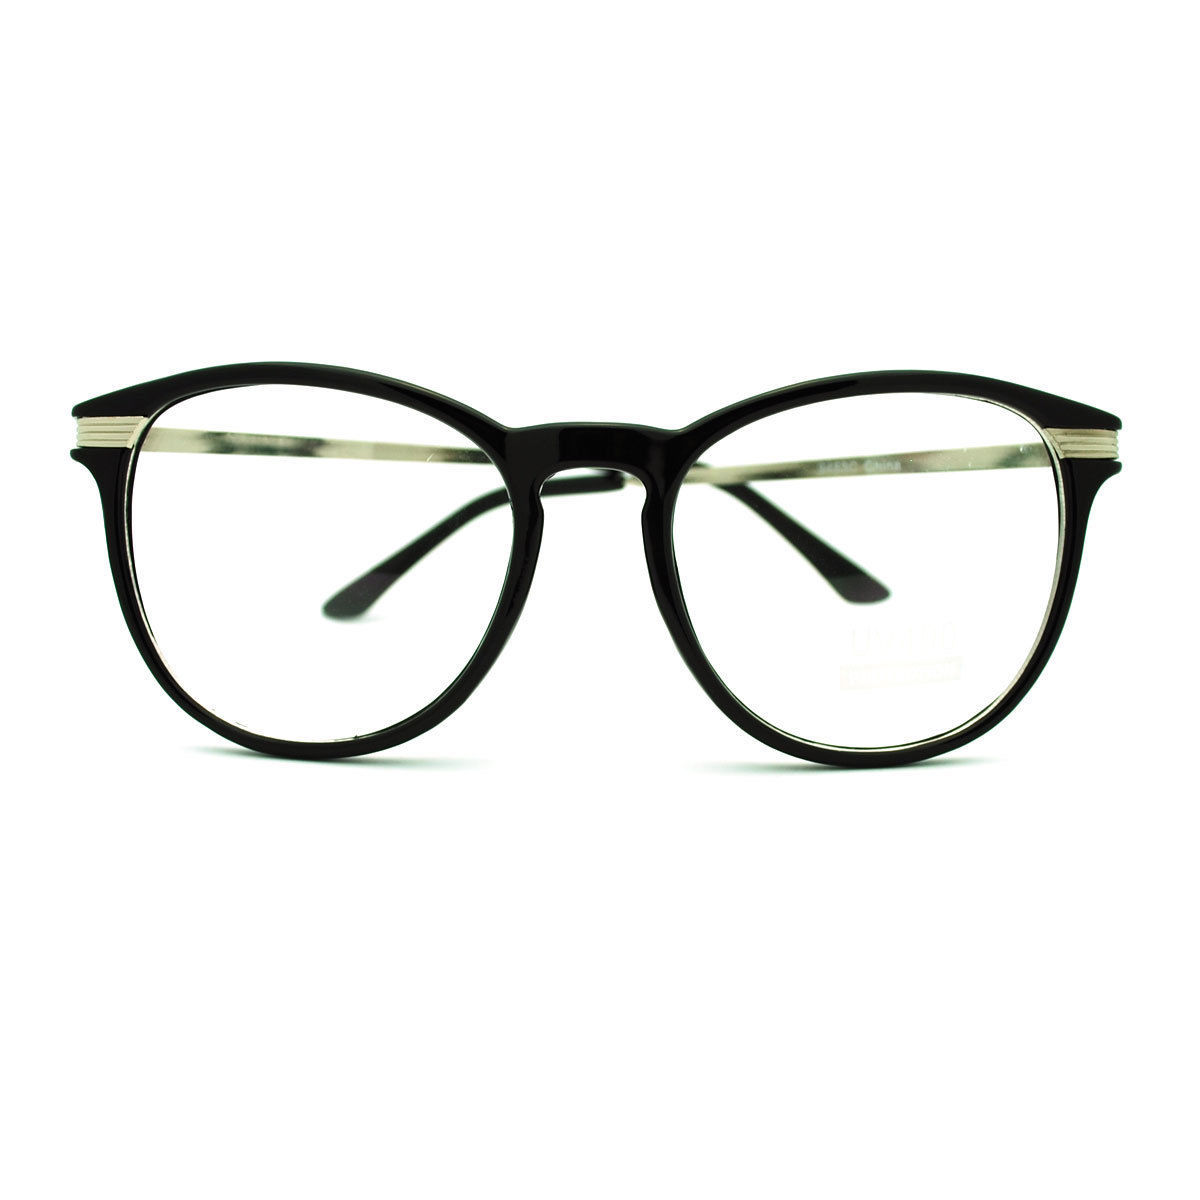 Metal Temple Nerdy Oval Round Plastic Frame Eye Glasses - Black - $7.95